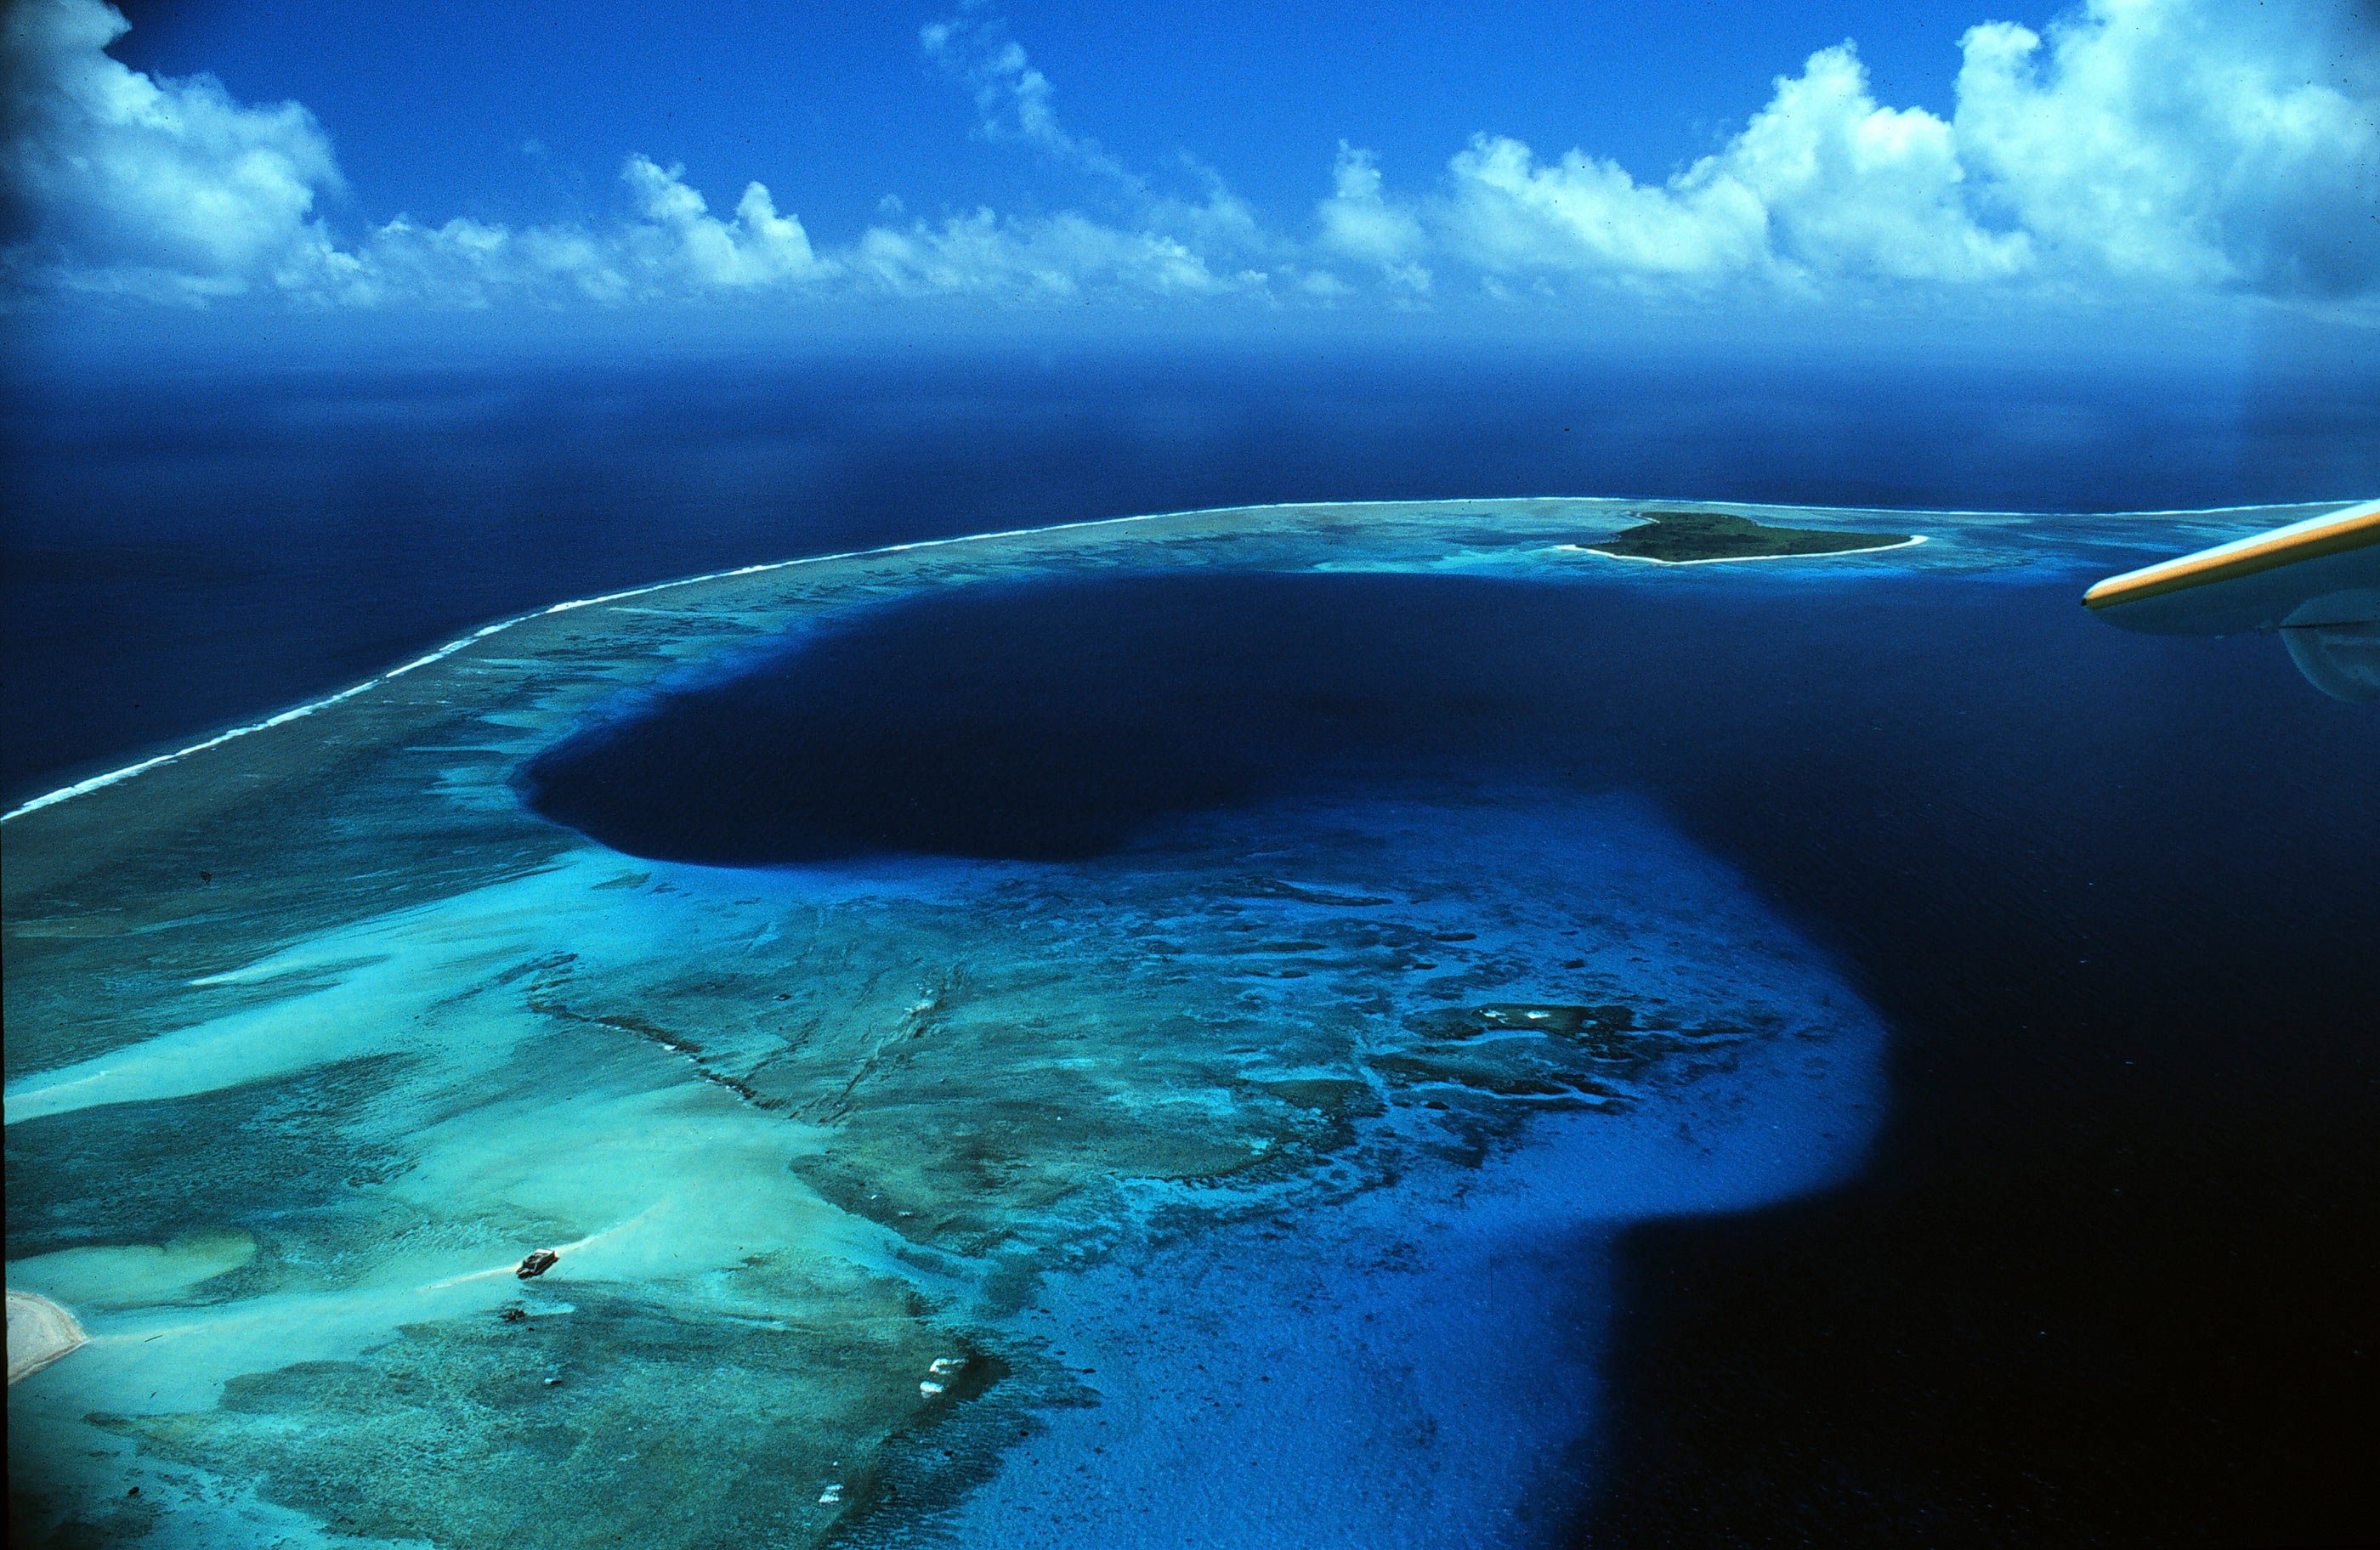 Остров человек в океане. Атолл бикини (Bikini Atoll), Маршалловы острова. Атолл на Маршалловых островах. Маршалловы острова АТО. Атолле бикини в тихом океане.